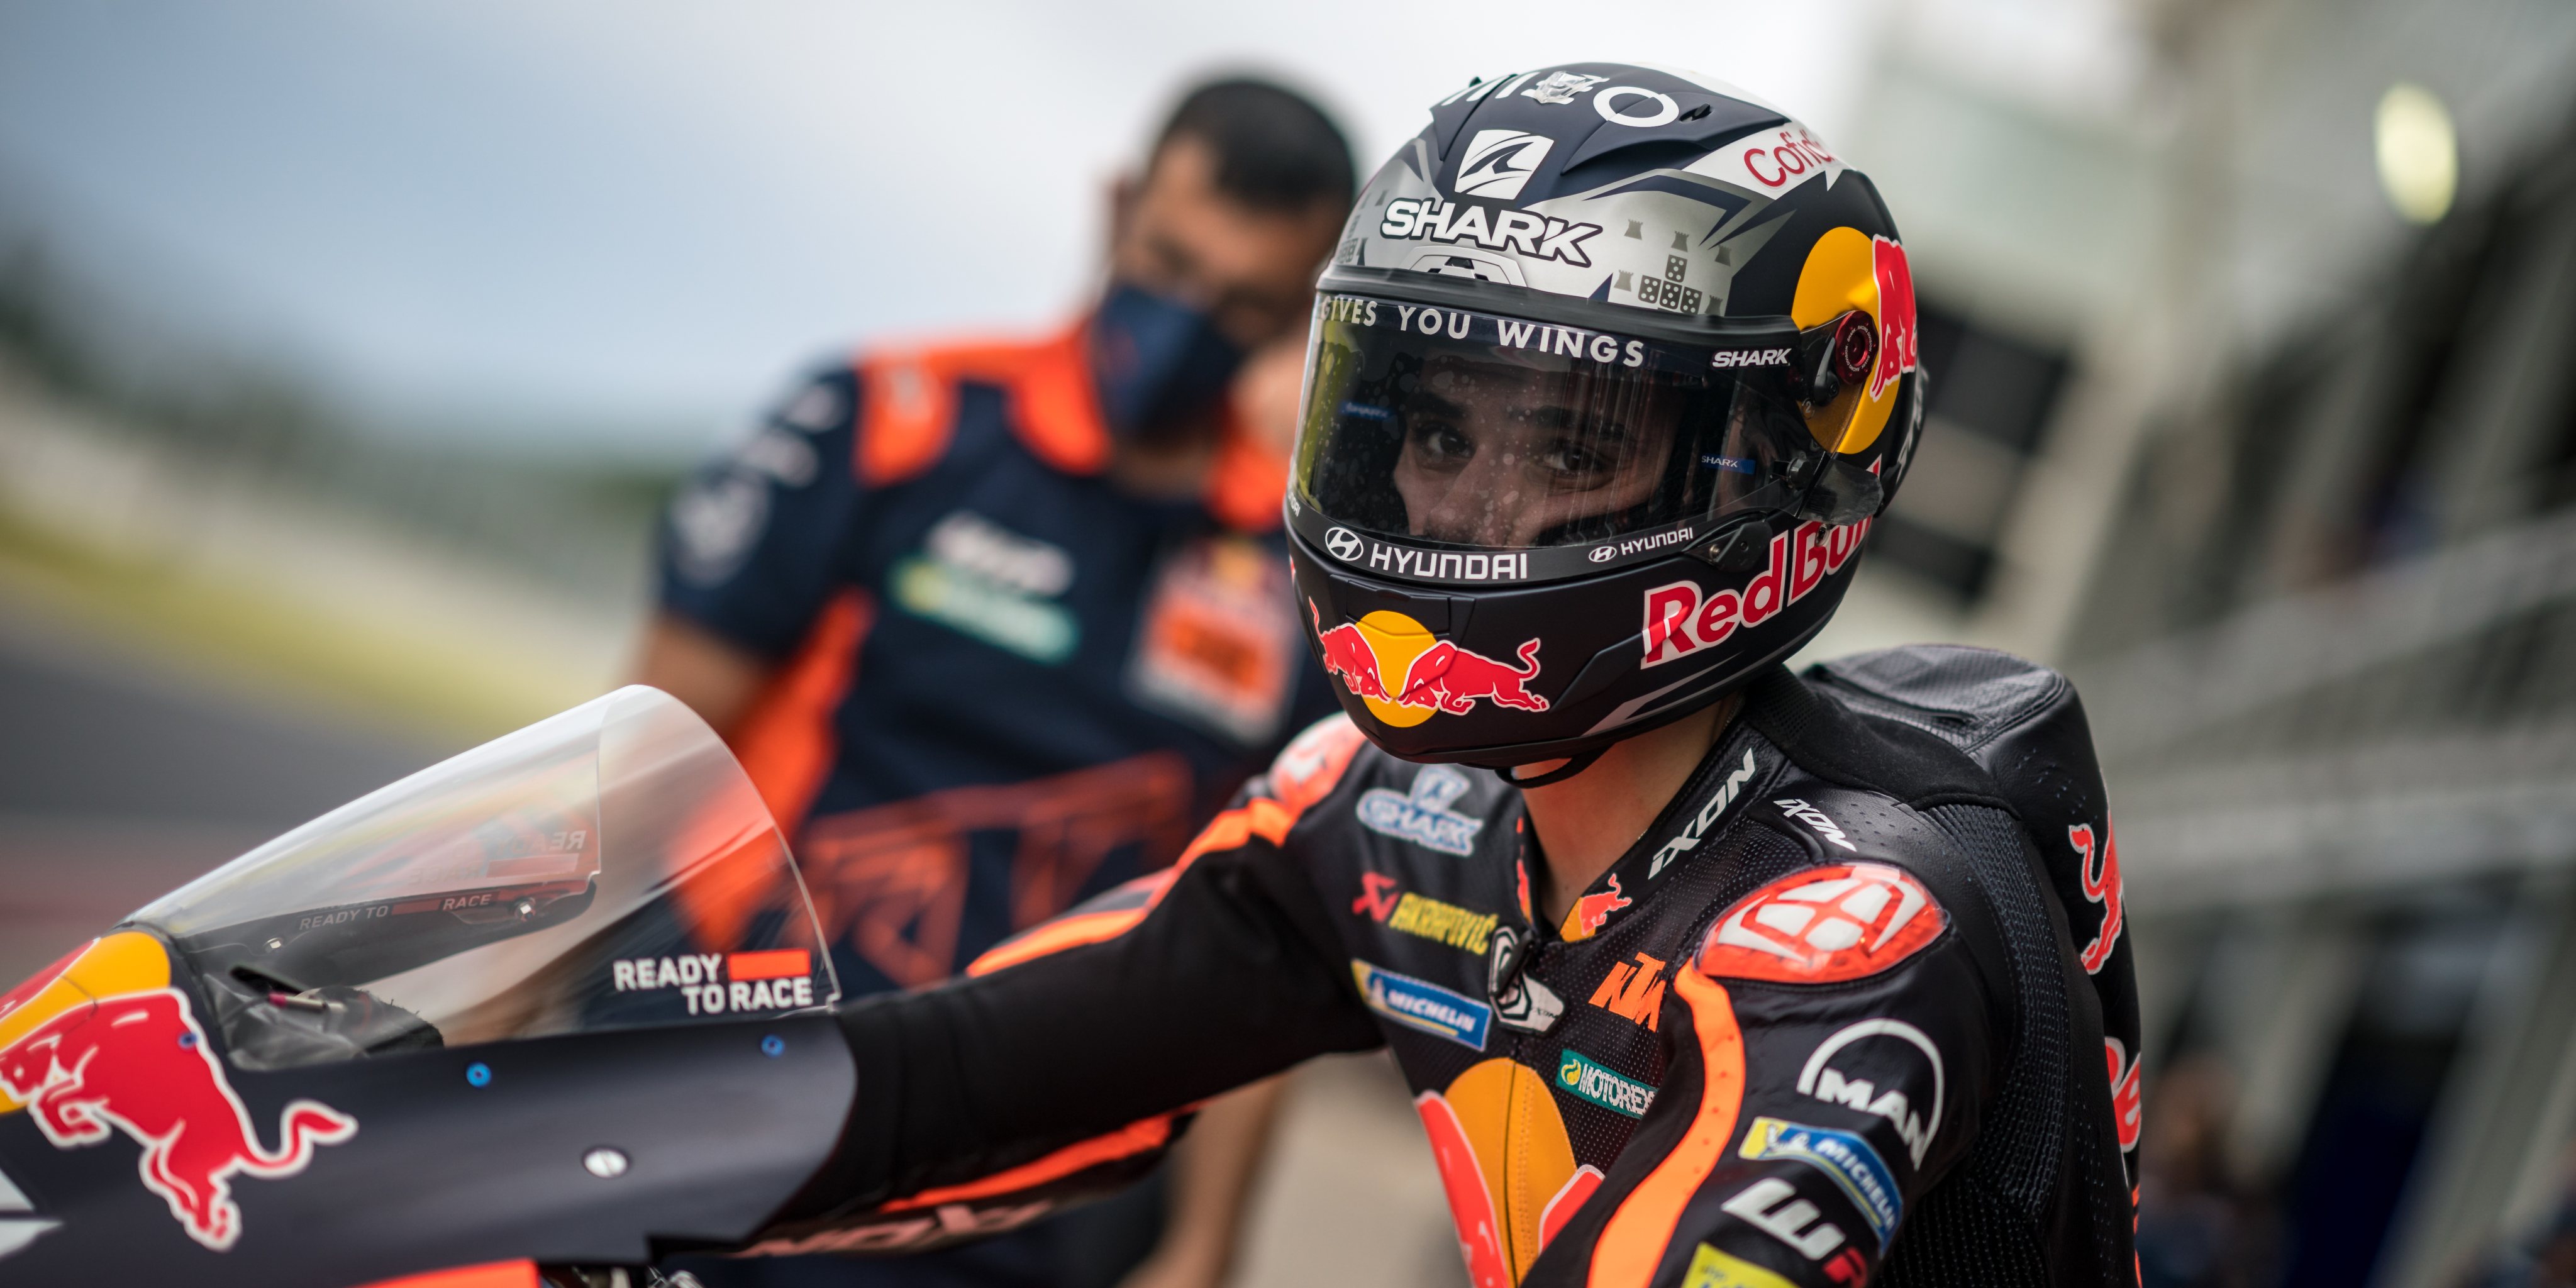 MotoGP Pre-Season Testing In Lombok, Indonesia - Day 1